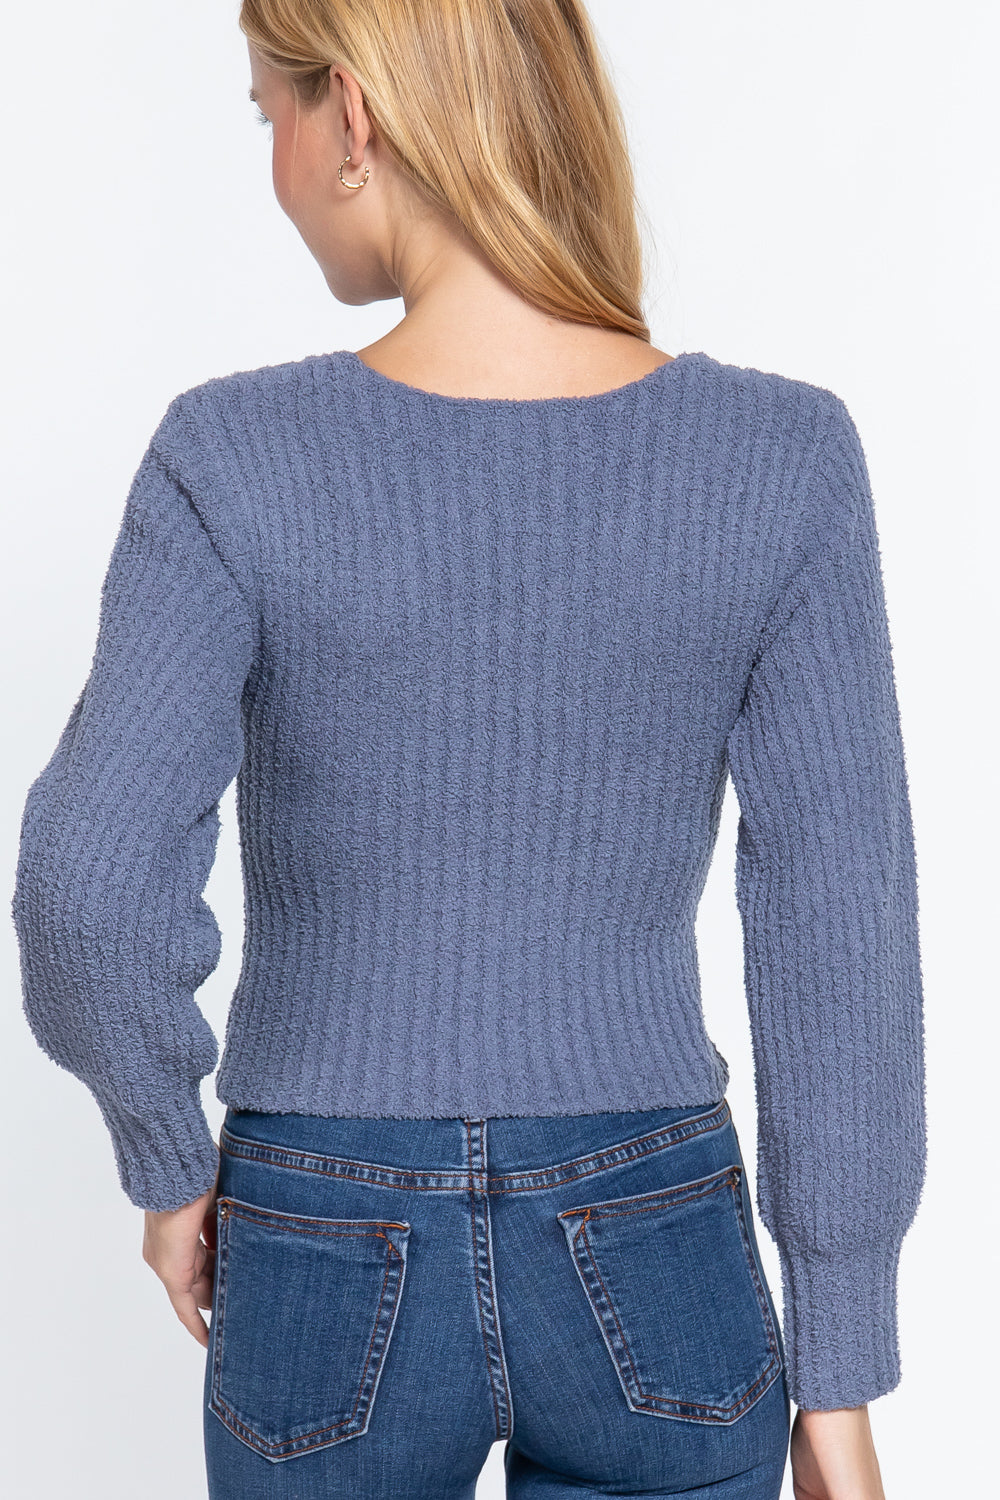 Women's Long Puff Slv V-neck Rib Sweater